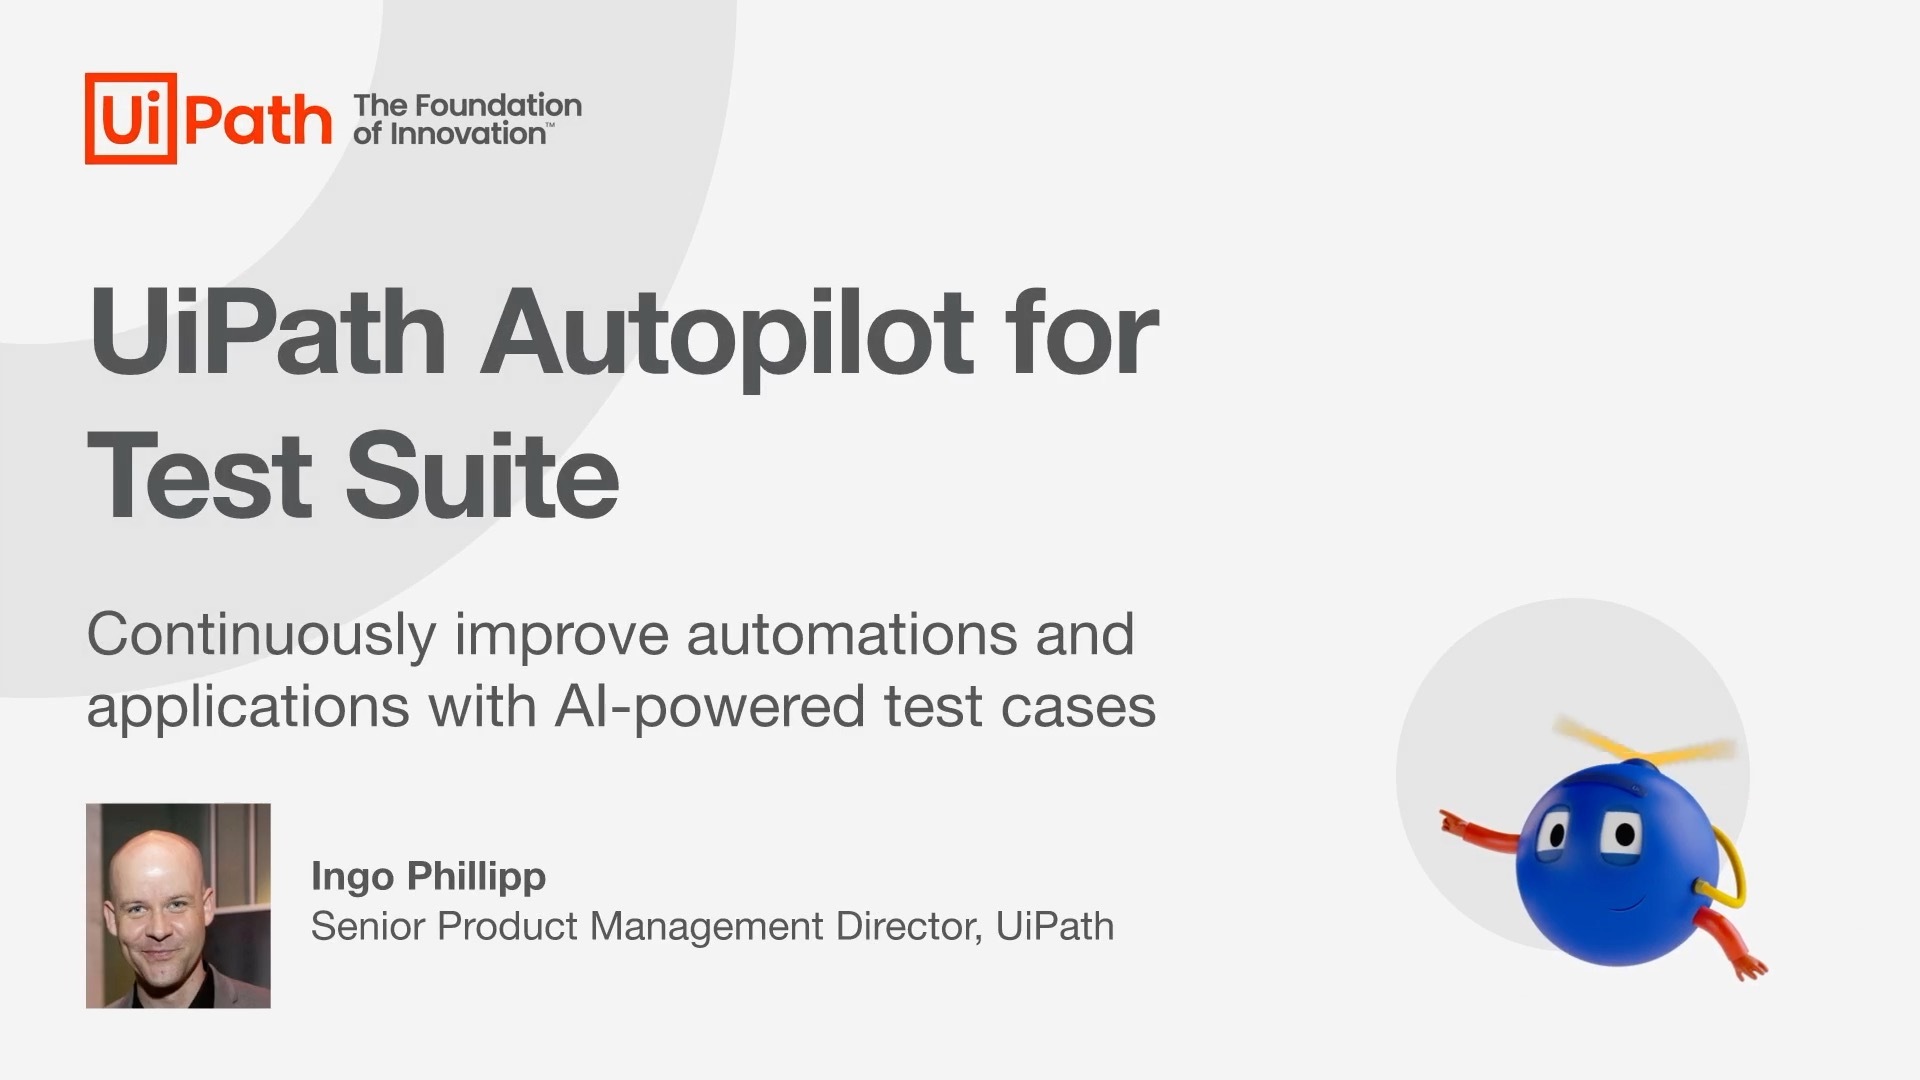 UiPath Autopilot for Test Suite in action